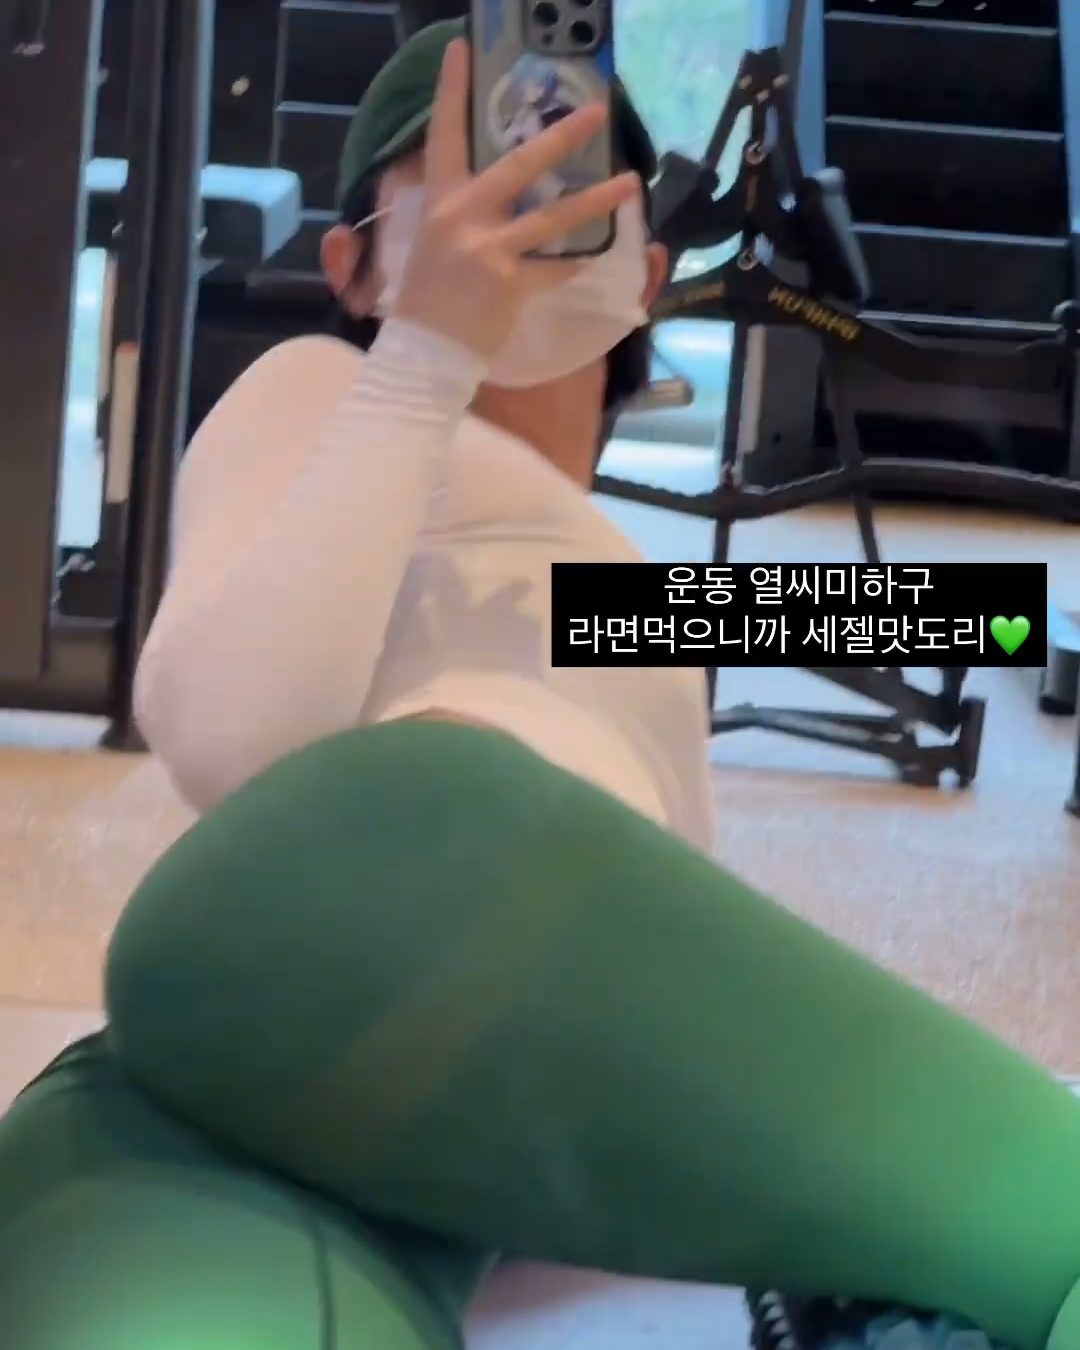 Korean Girl Recording her Big Ass at The Gym in Green Leggings - @heeheemoon 문냥 @moon_nyang_